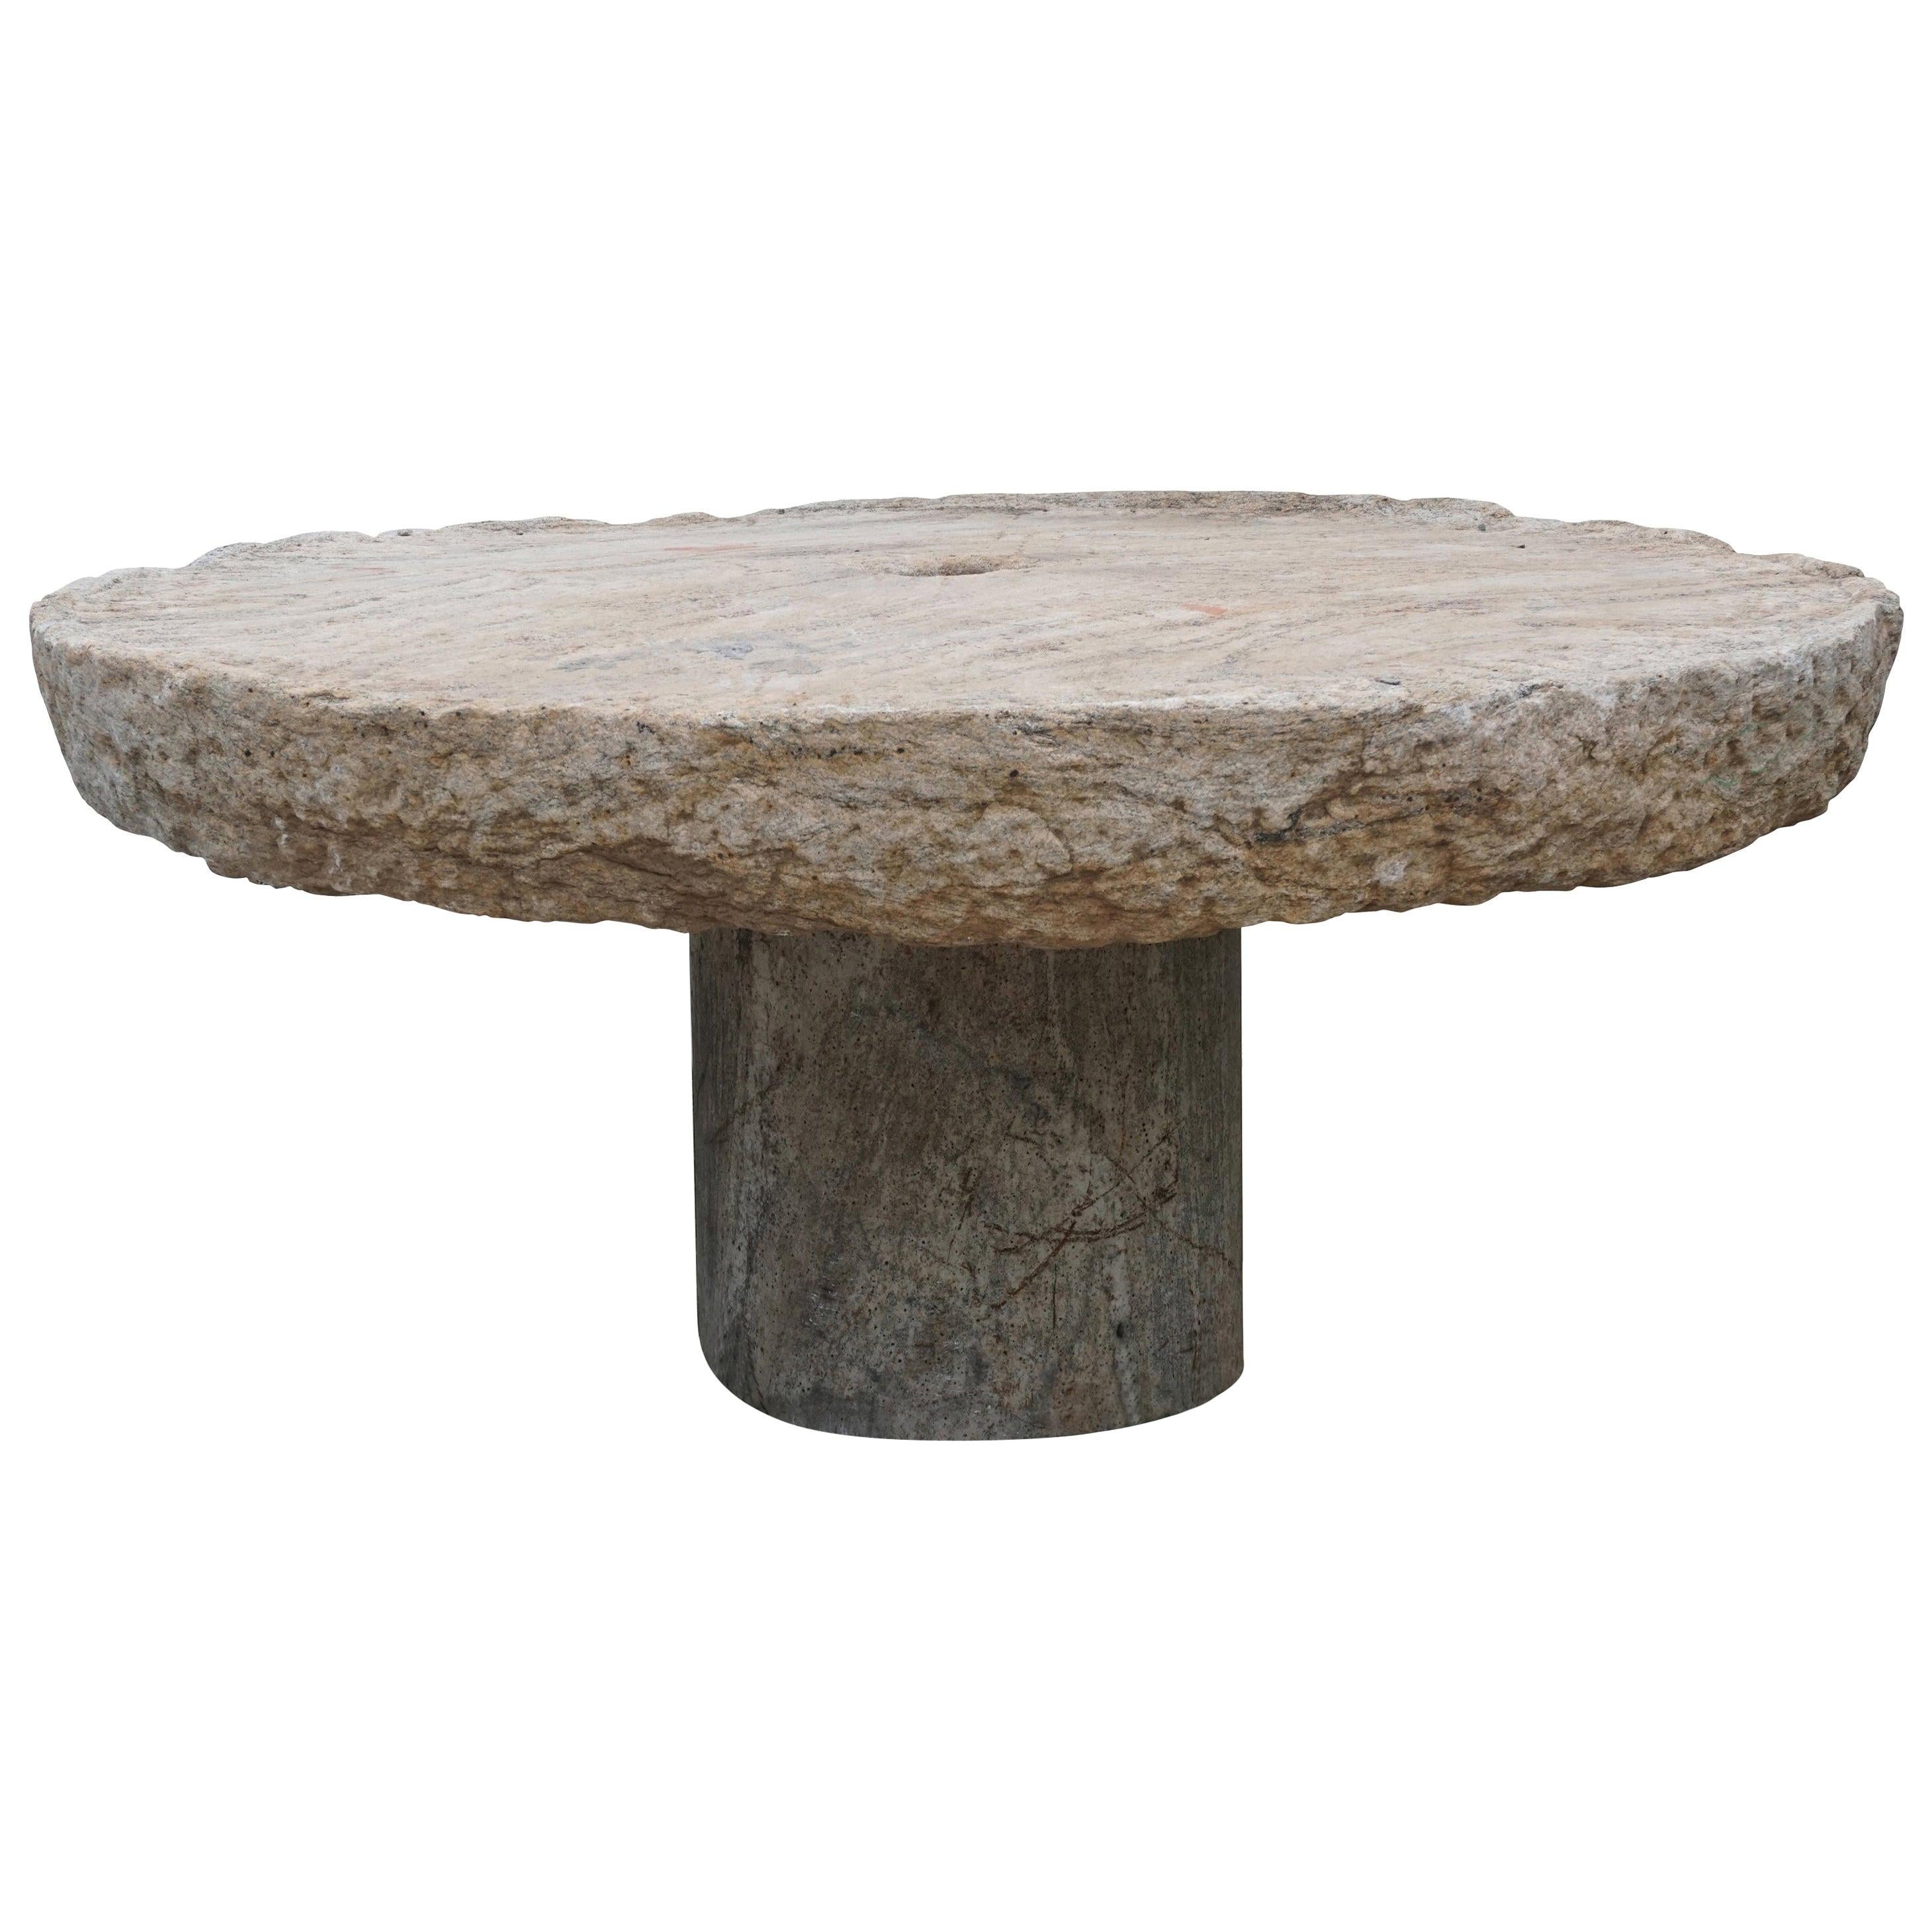 19th Century Italian Round Millstone Table from Sicily